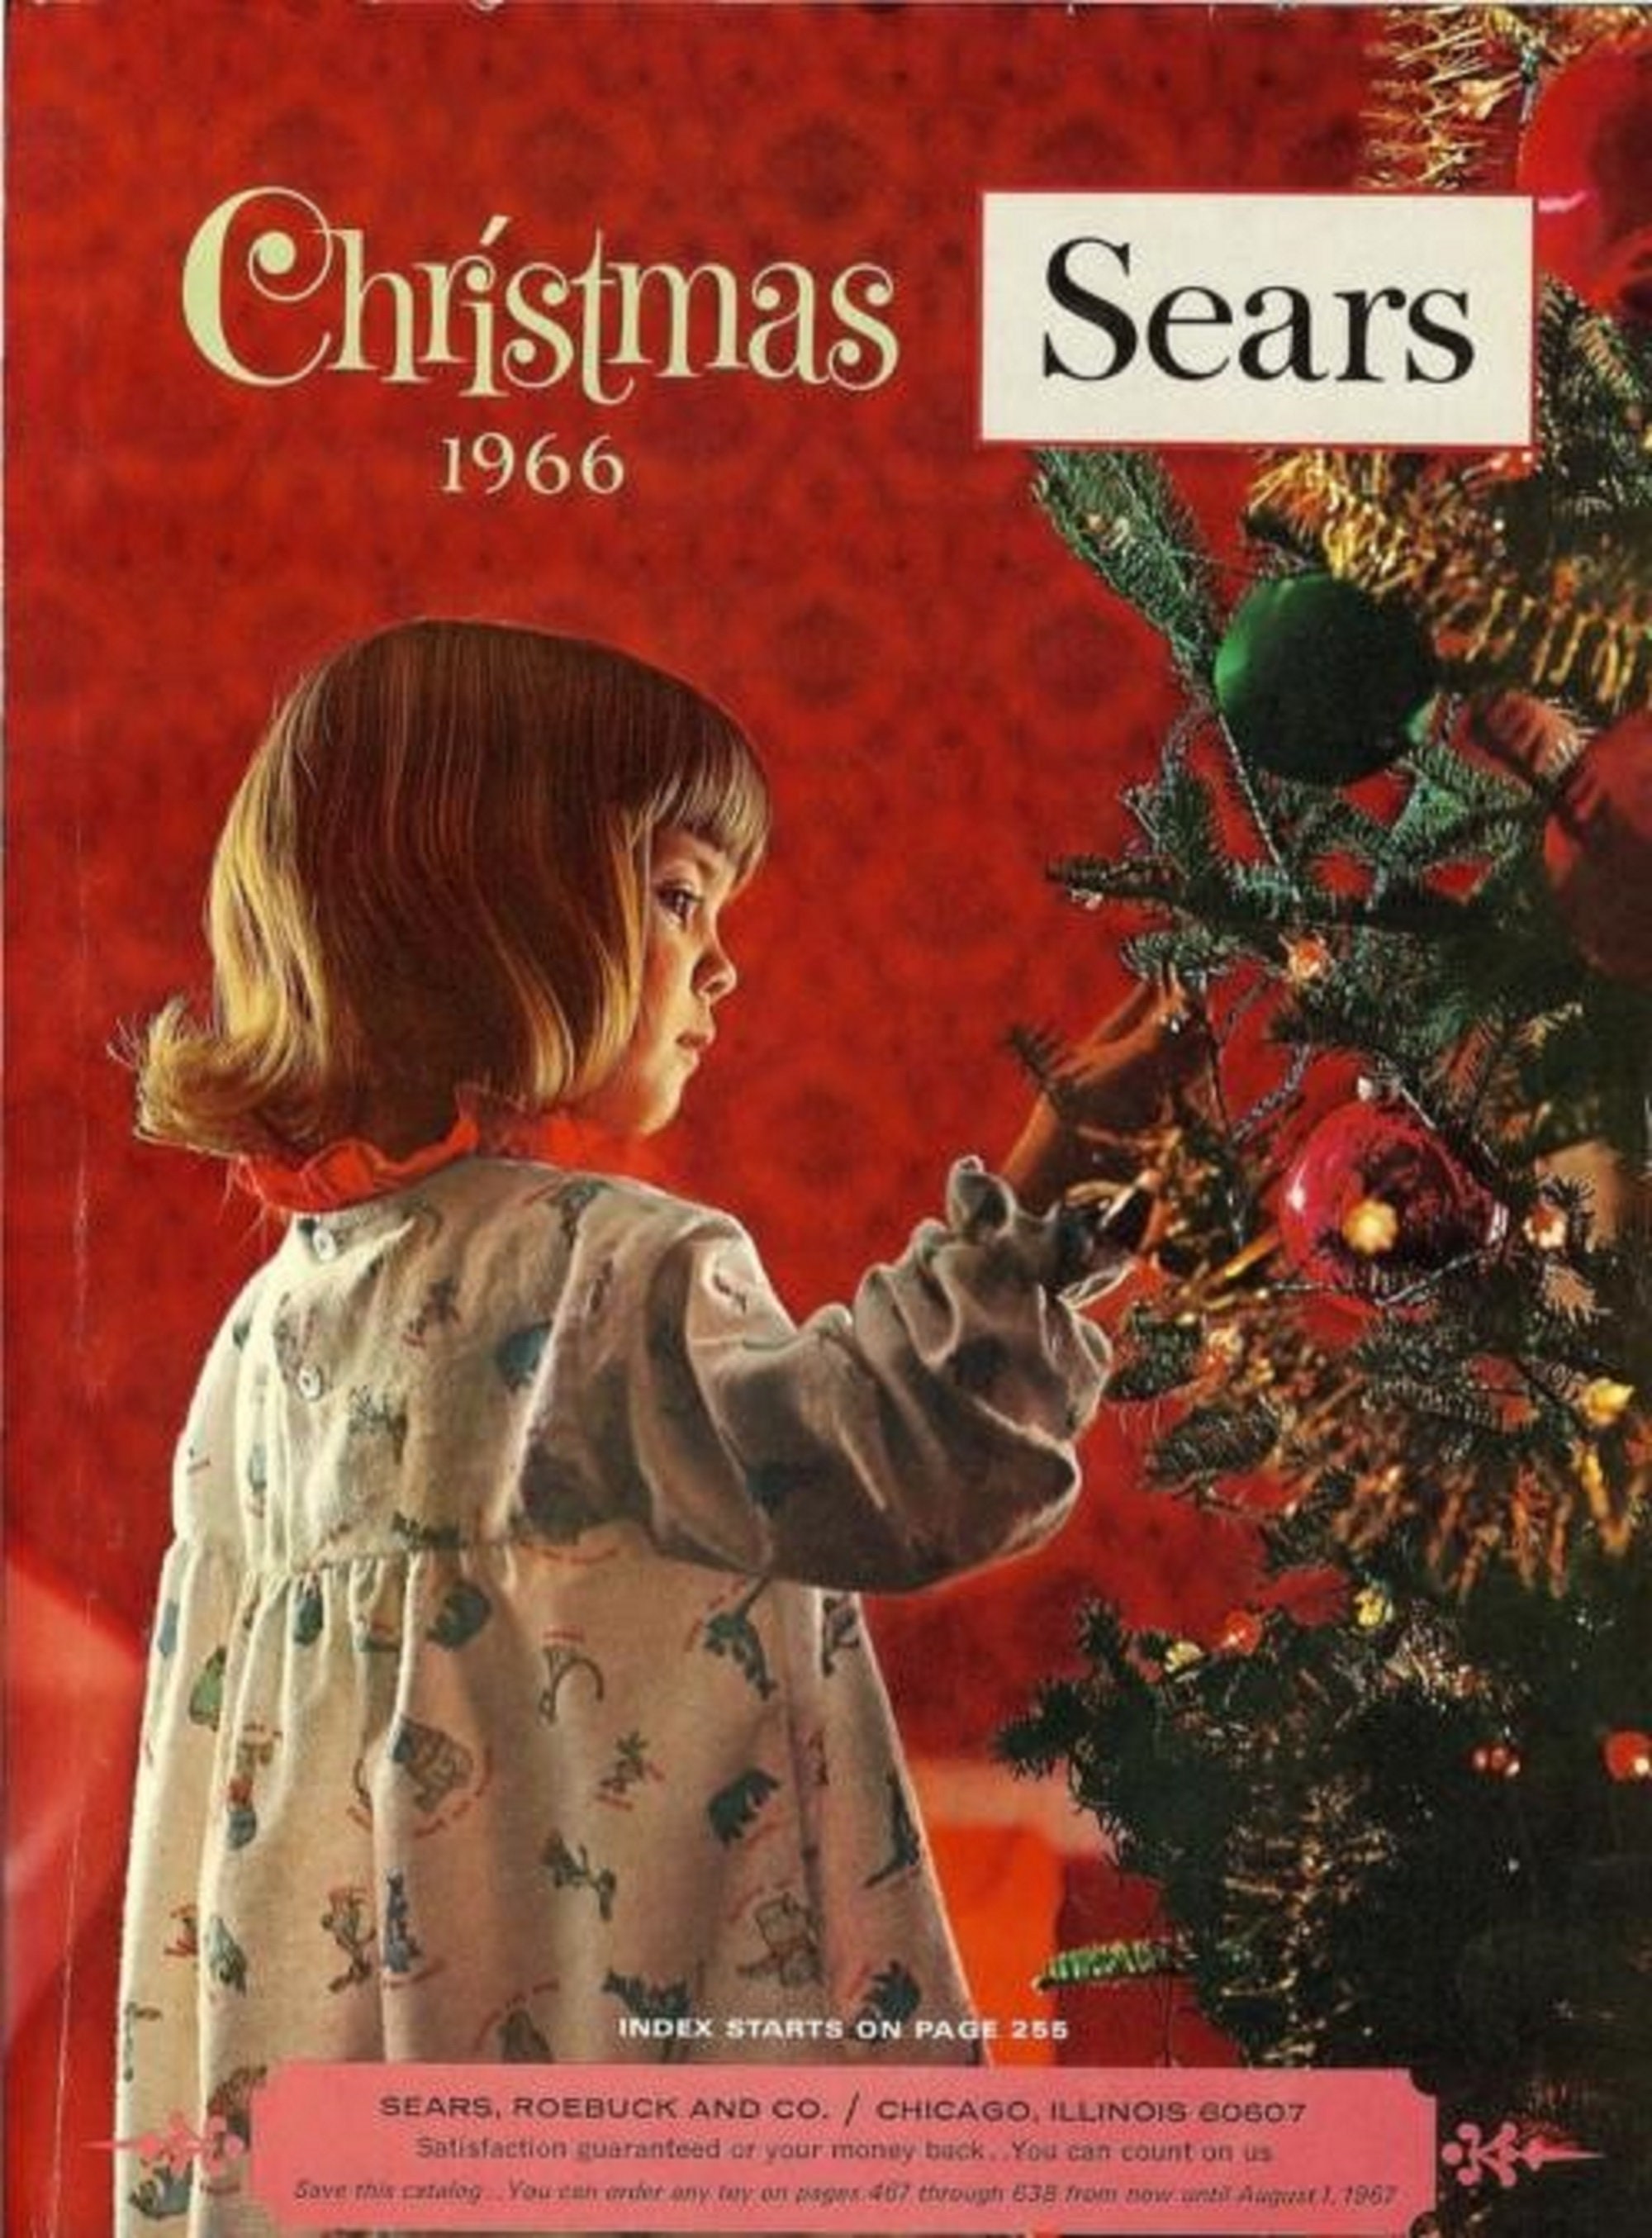 Do you remember the Sears Roebuck catalog? - Quora